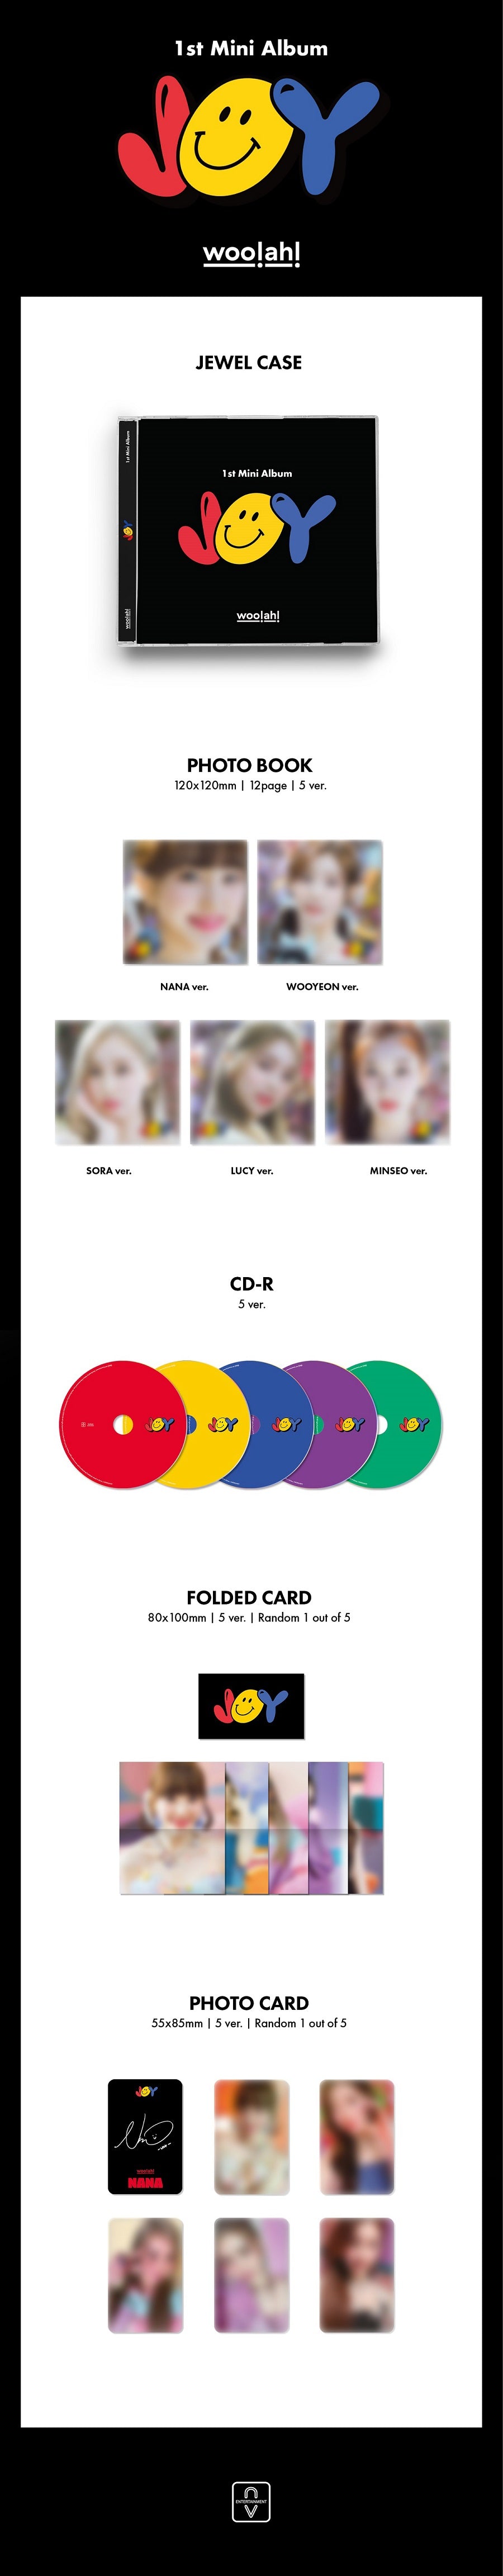 woo!ah! Mini Album Vol. 1 - JOY (Jewel Version) (Limited Edition) (Random Version)